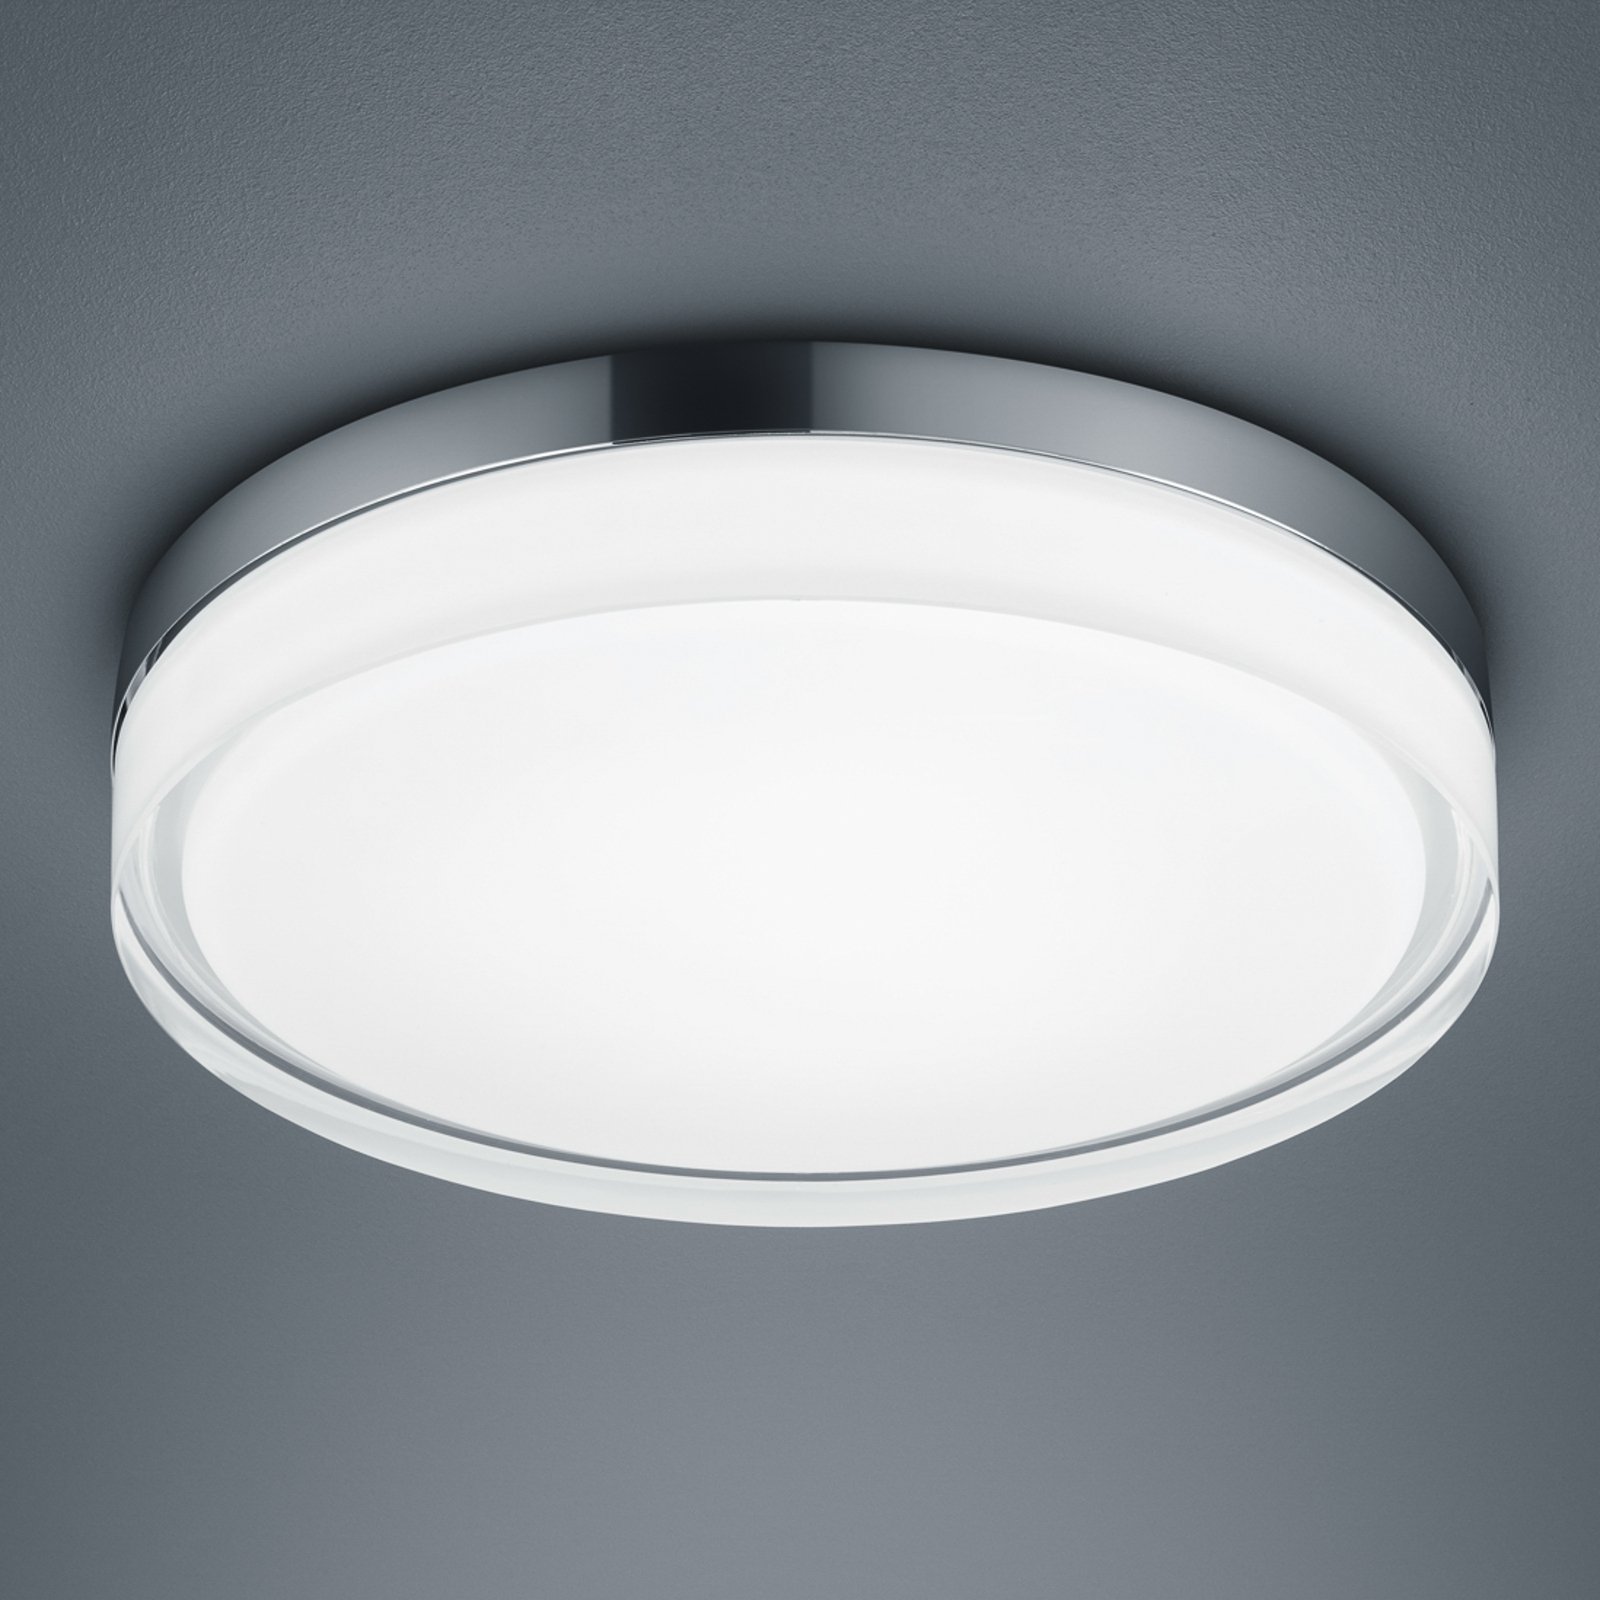 Helestra Tana LED ceiling light, chrome, Ø 33 cm